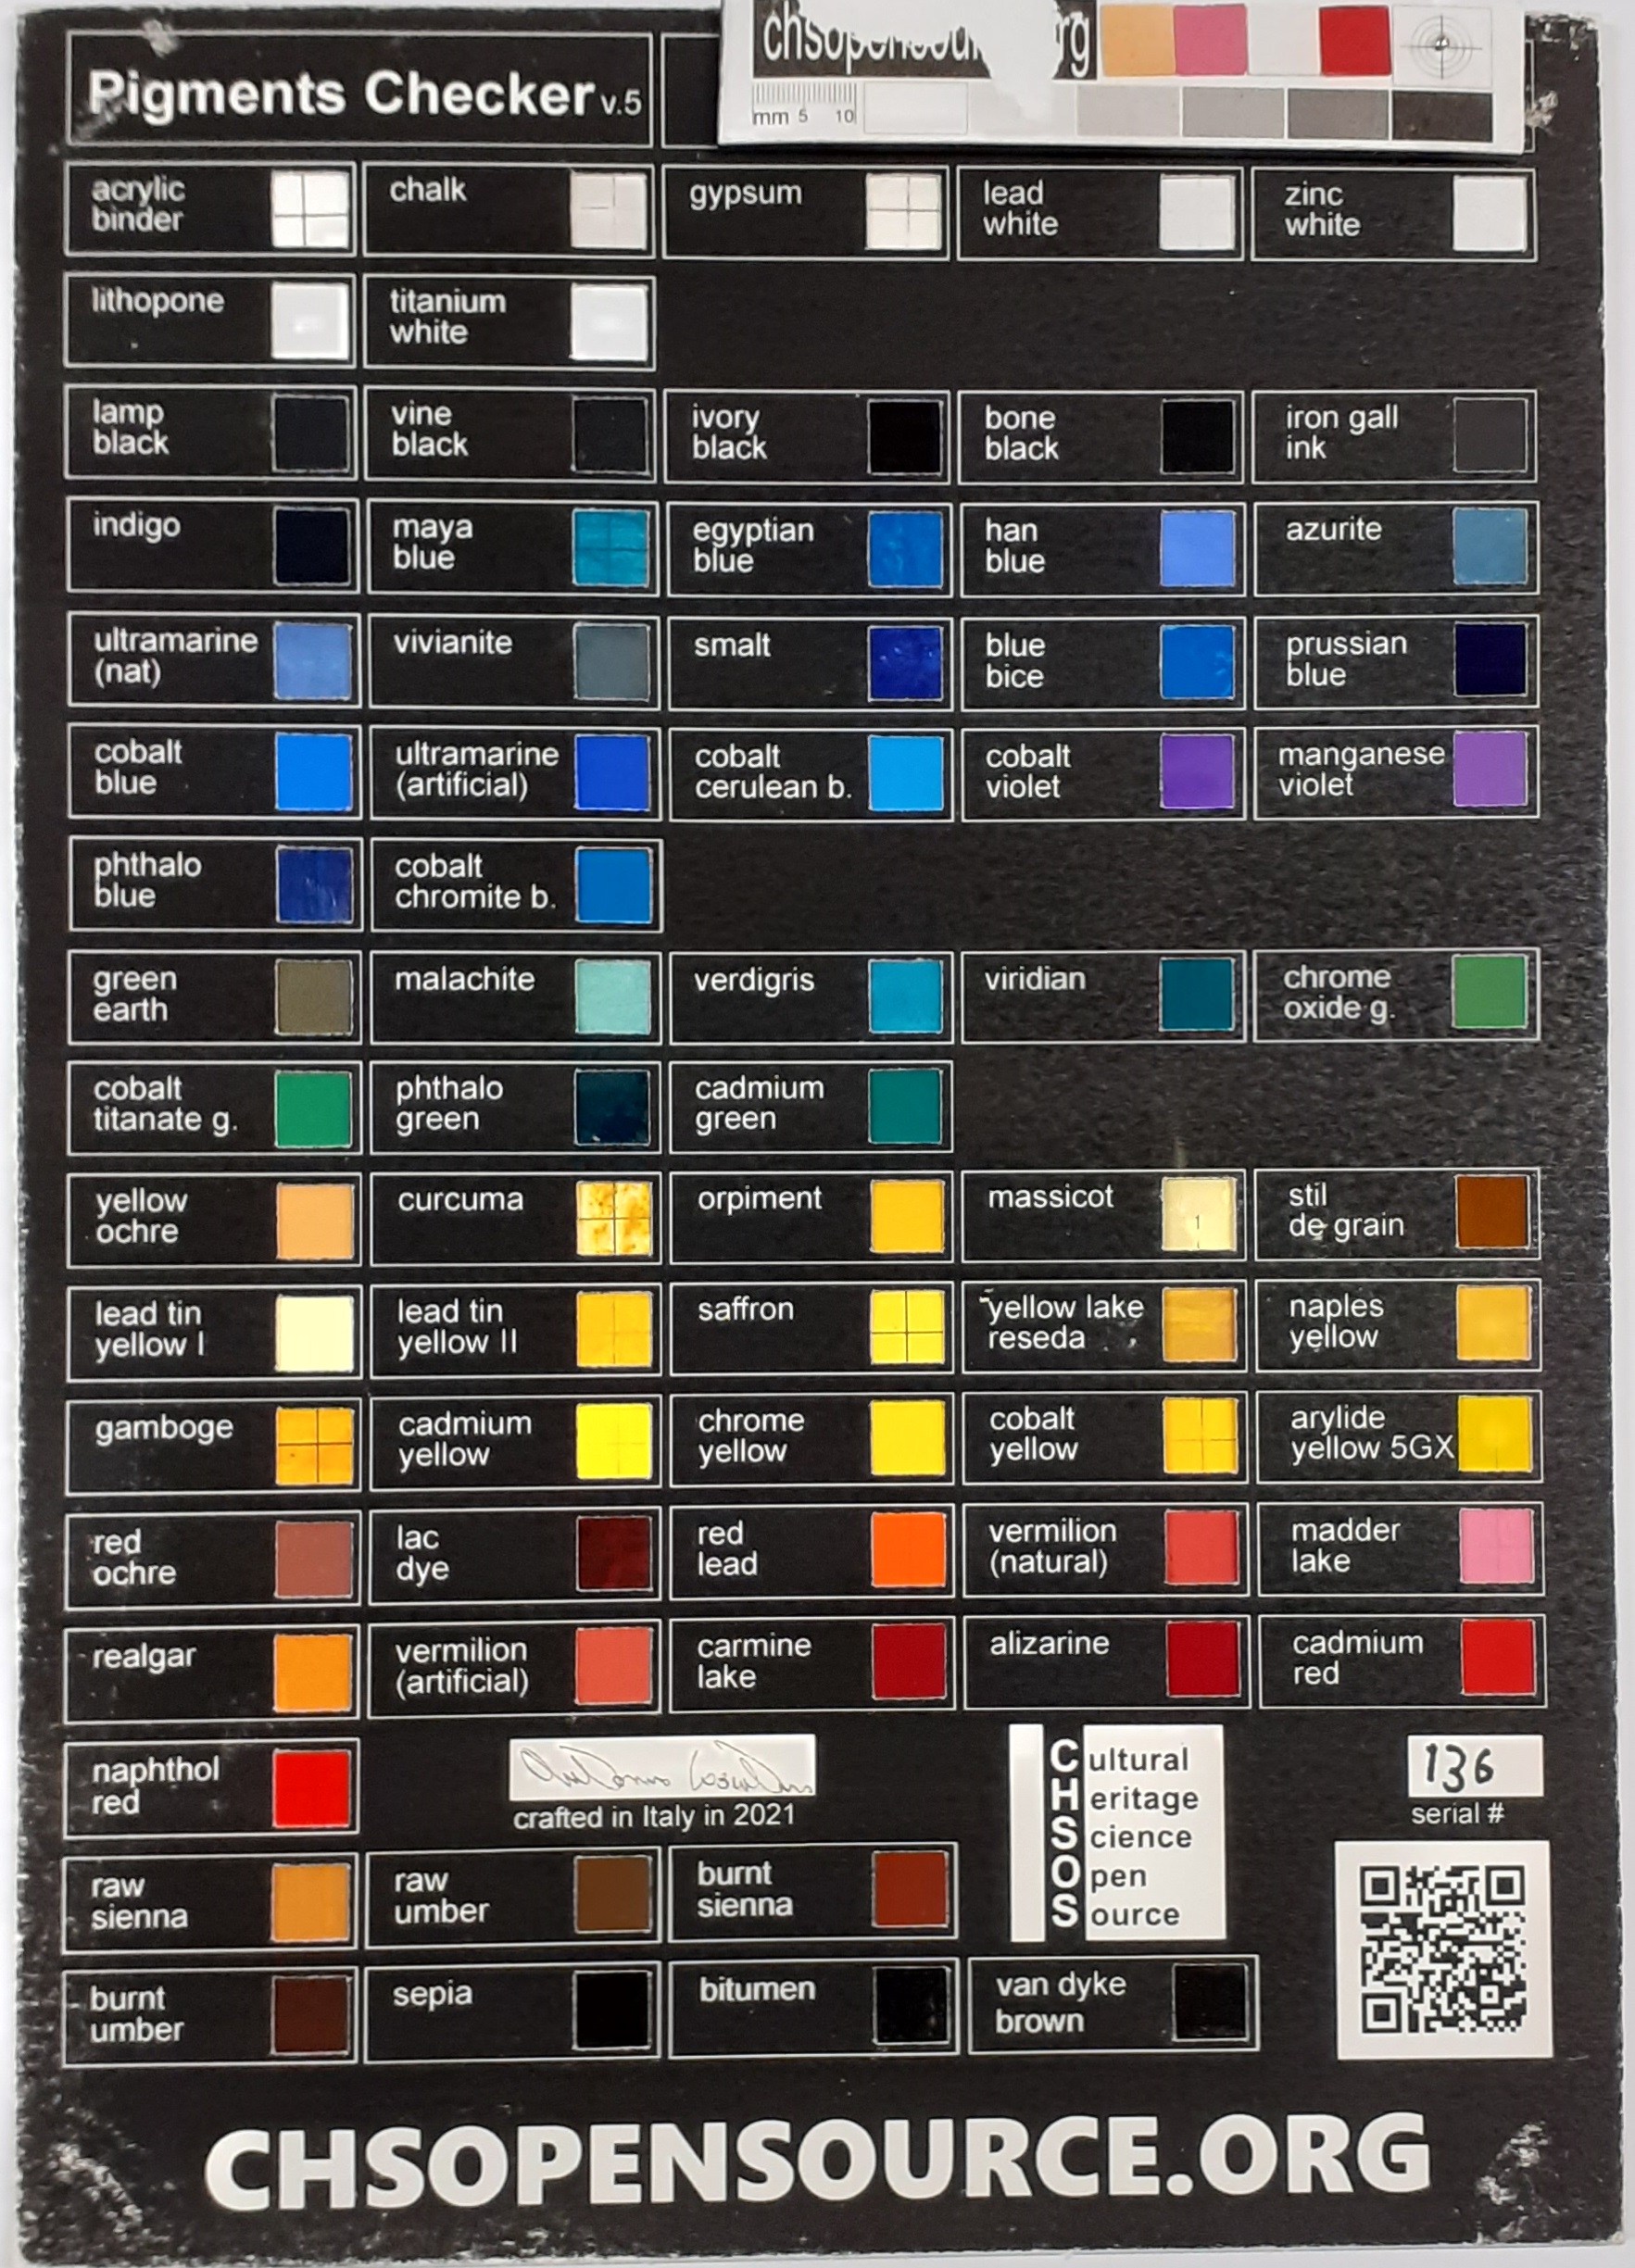 Colour photograph of pigment checker chart